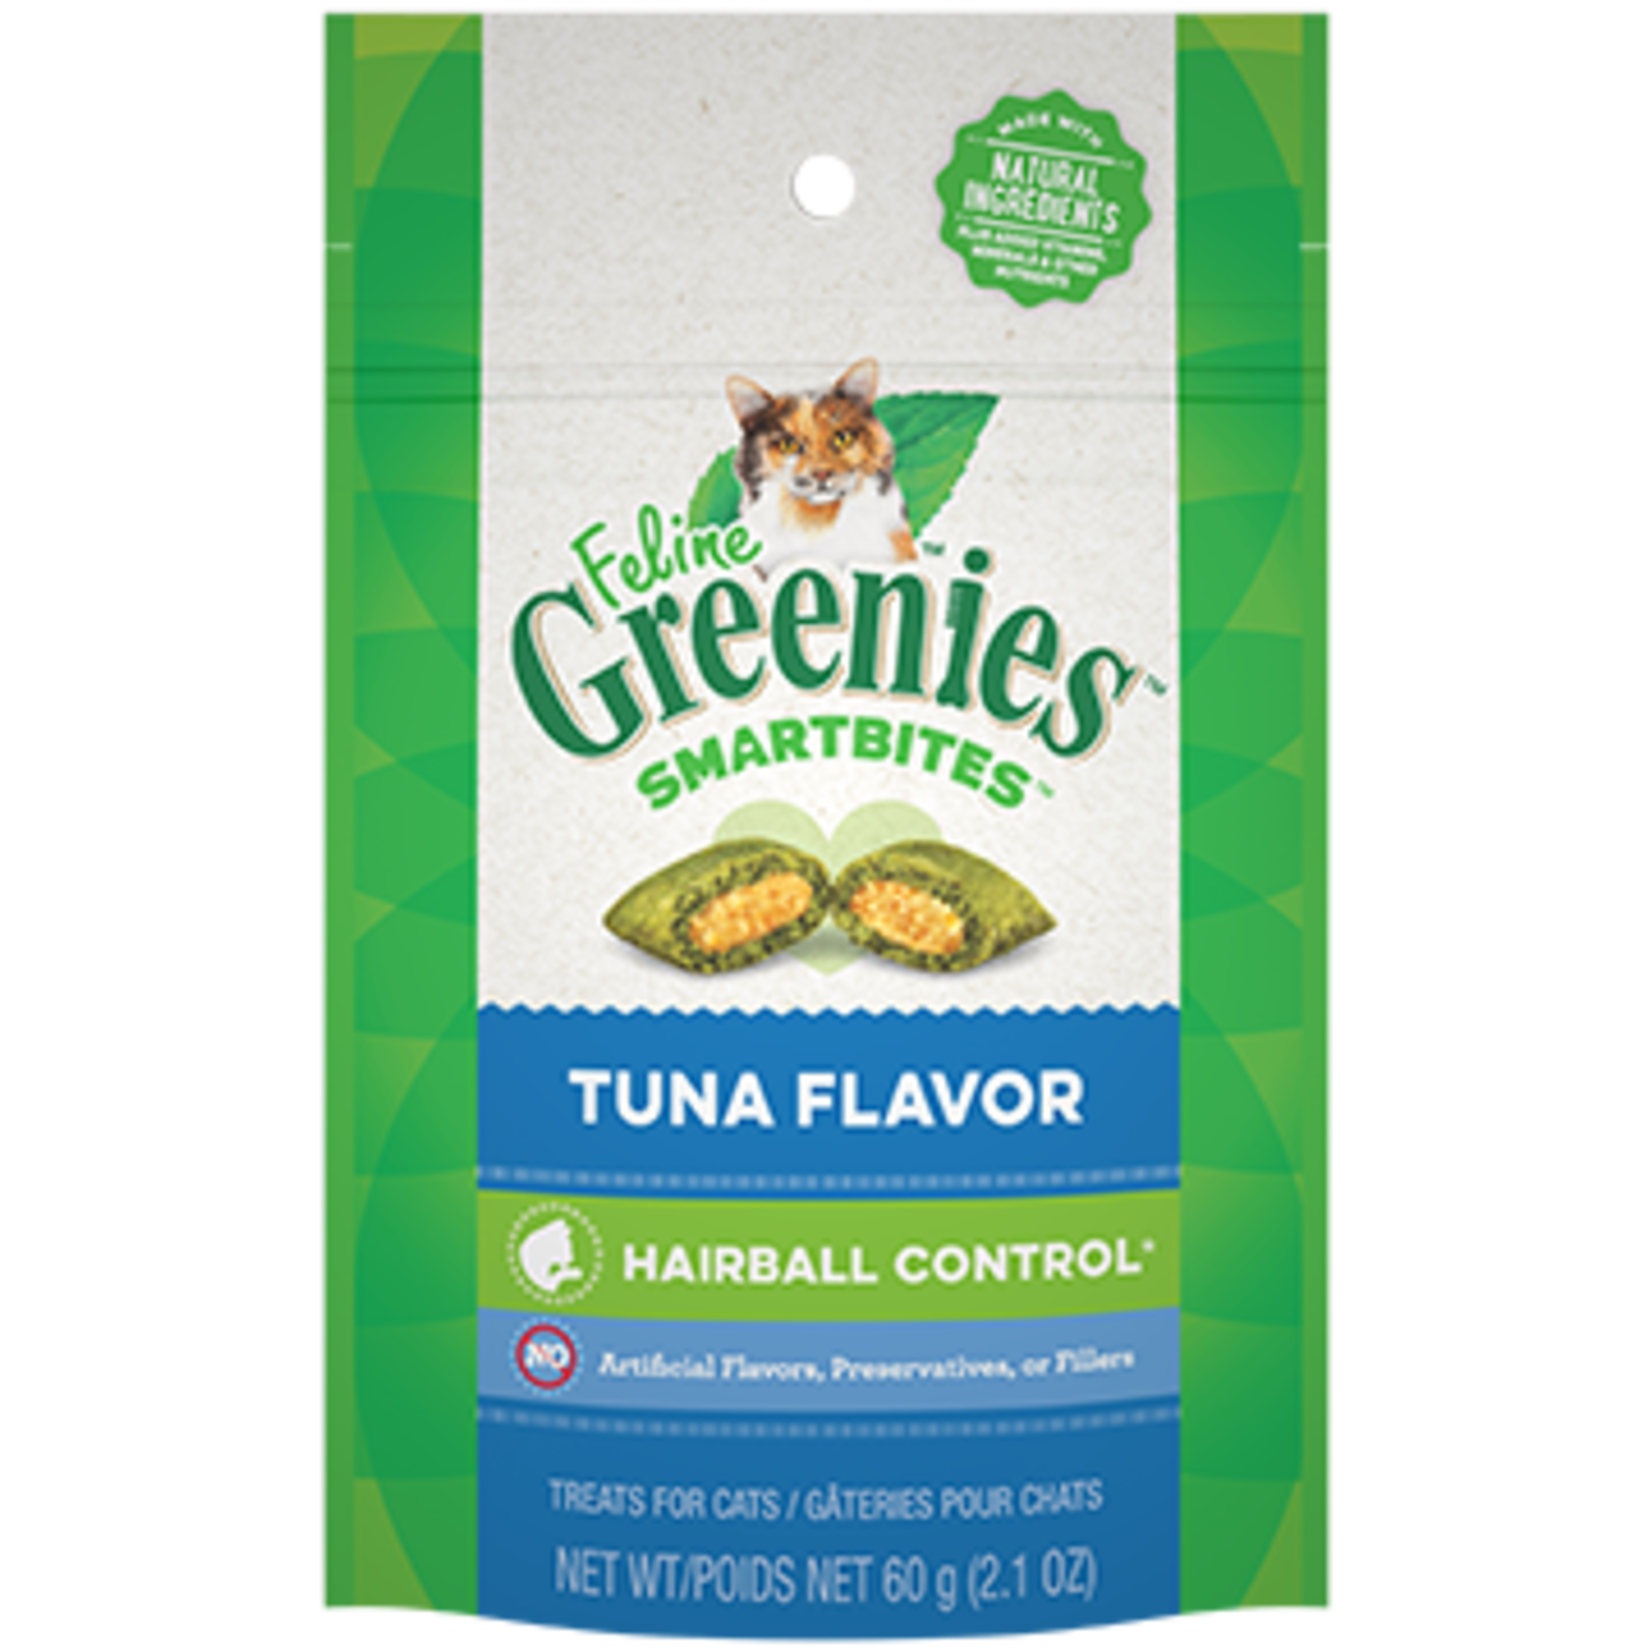 Greenies Feline Greenies Smartbites Cat Treats Hairball Control Tuna Flavor